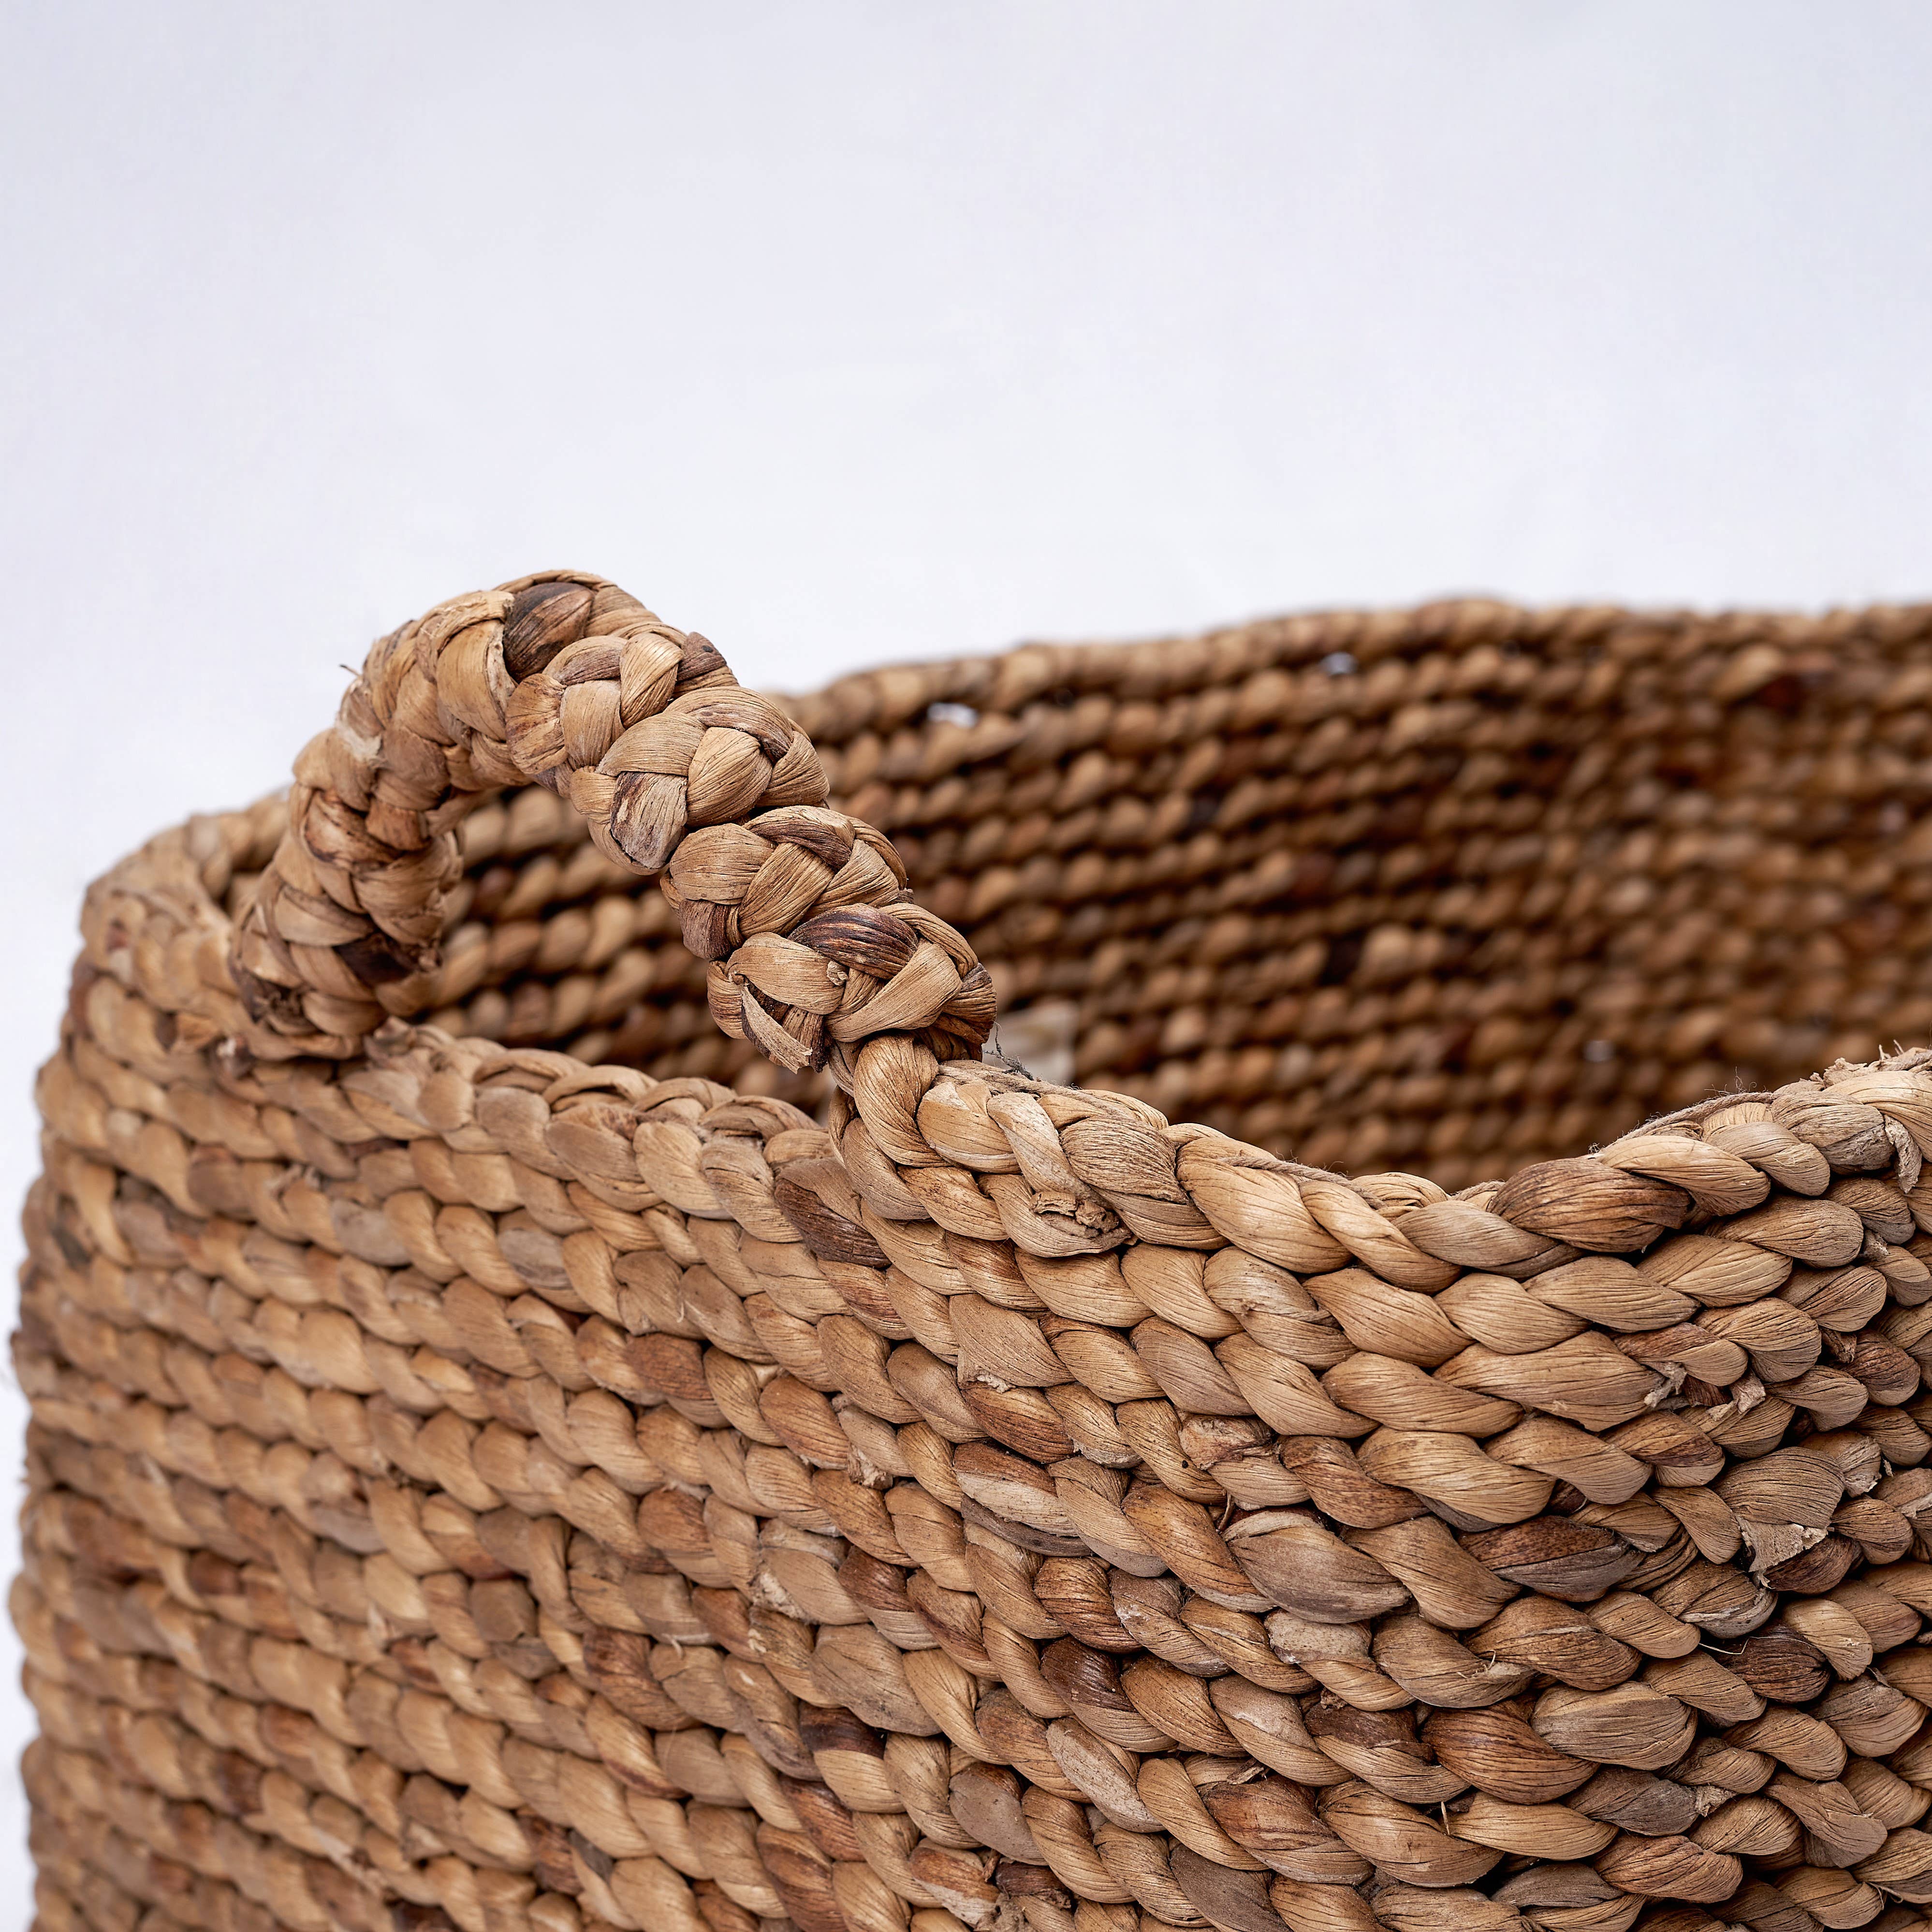 Water Hyacinth Storage Basket (TCSB-23067) Wholesale!